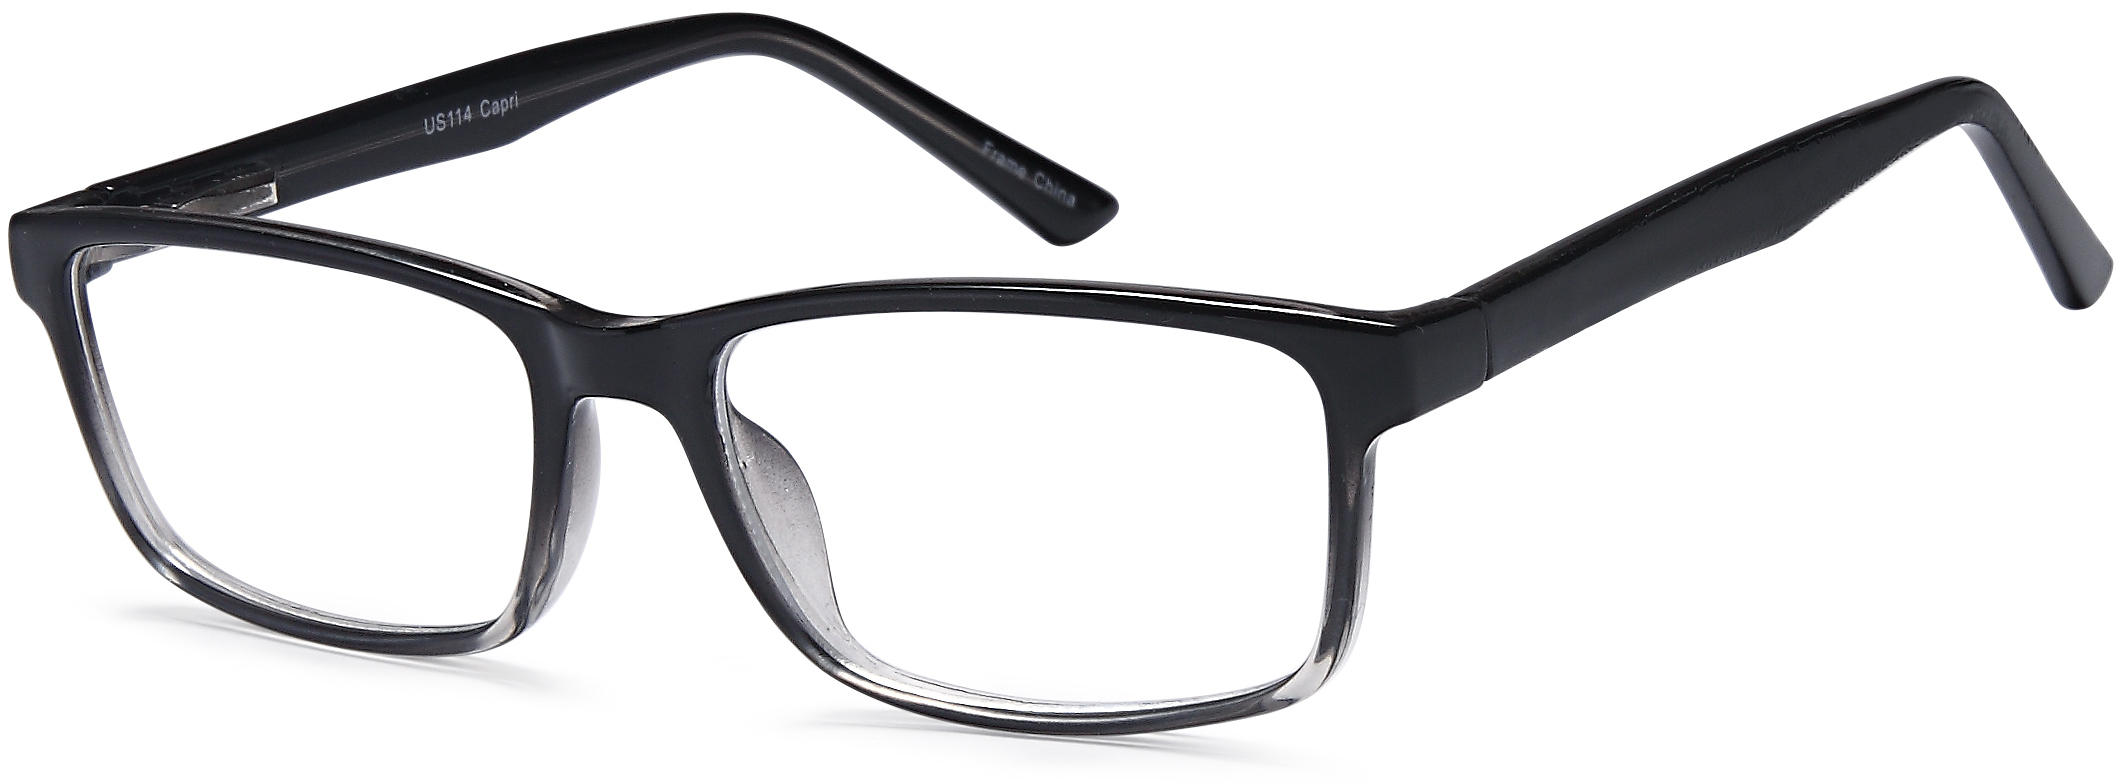 Picture of 4U Eyeglasses US114